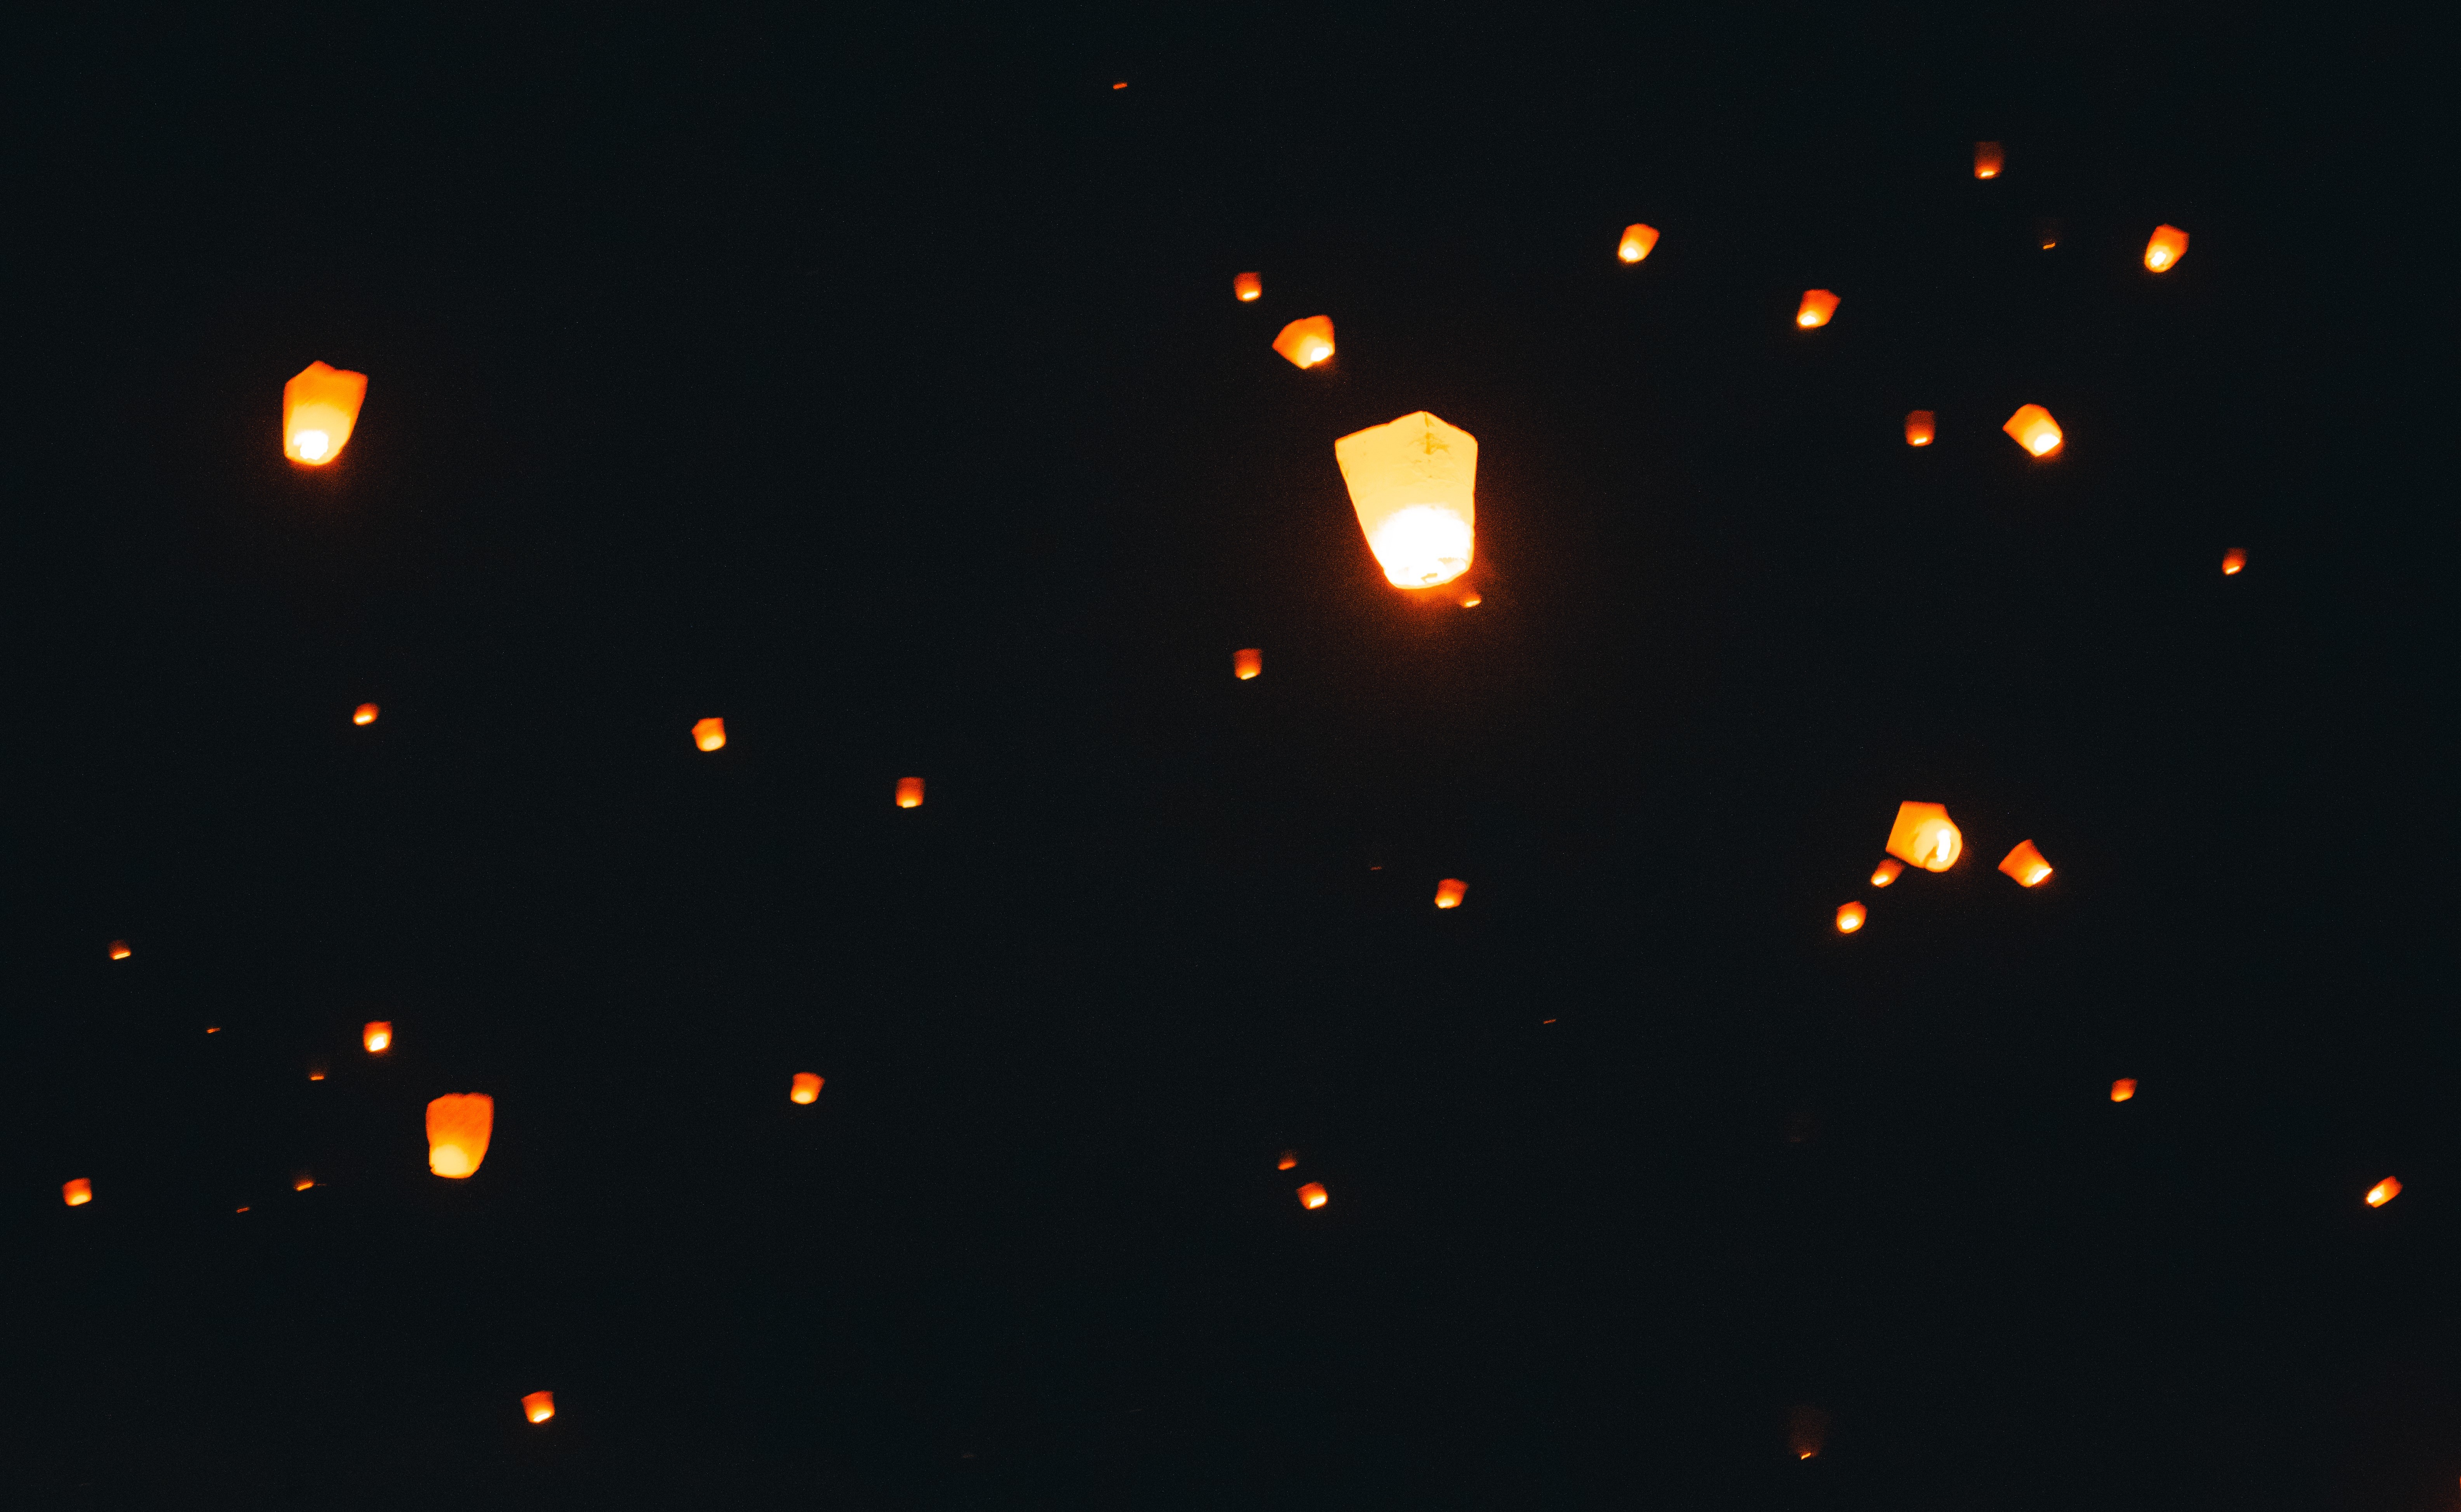 Lanterns and the night sky